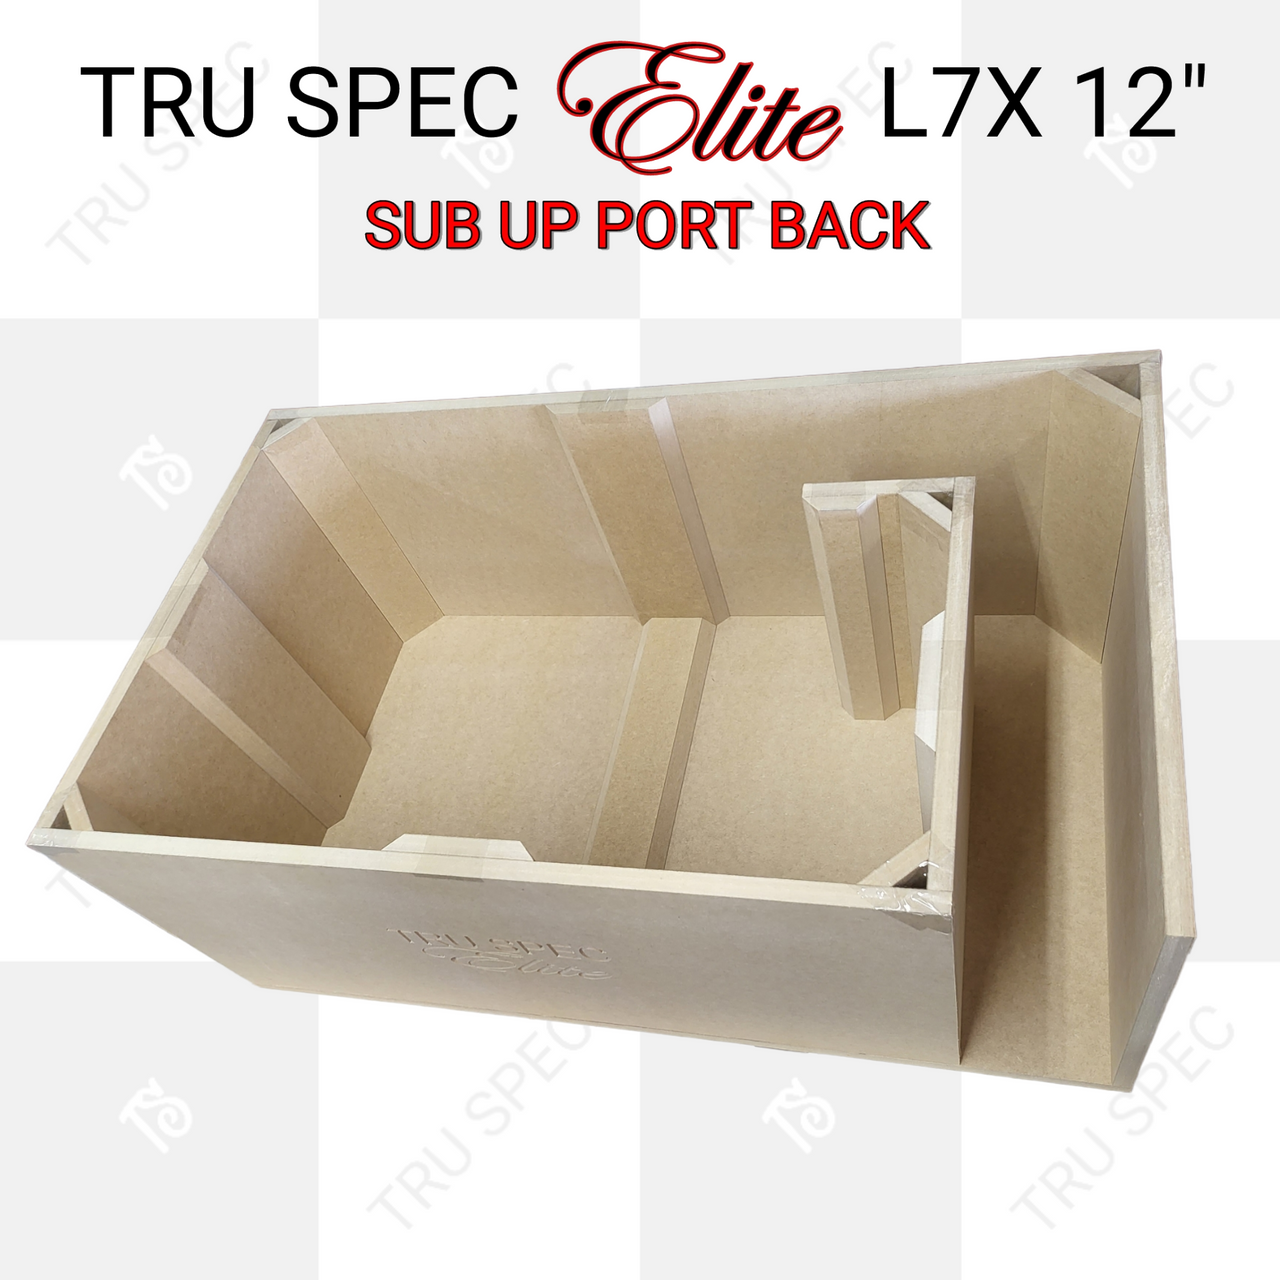 TRU SPEC Elite Prefab Dual Kicker Solo X 12" L7X Sub Up Port Back Subwoofer Enclosure 